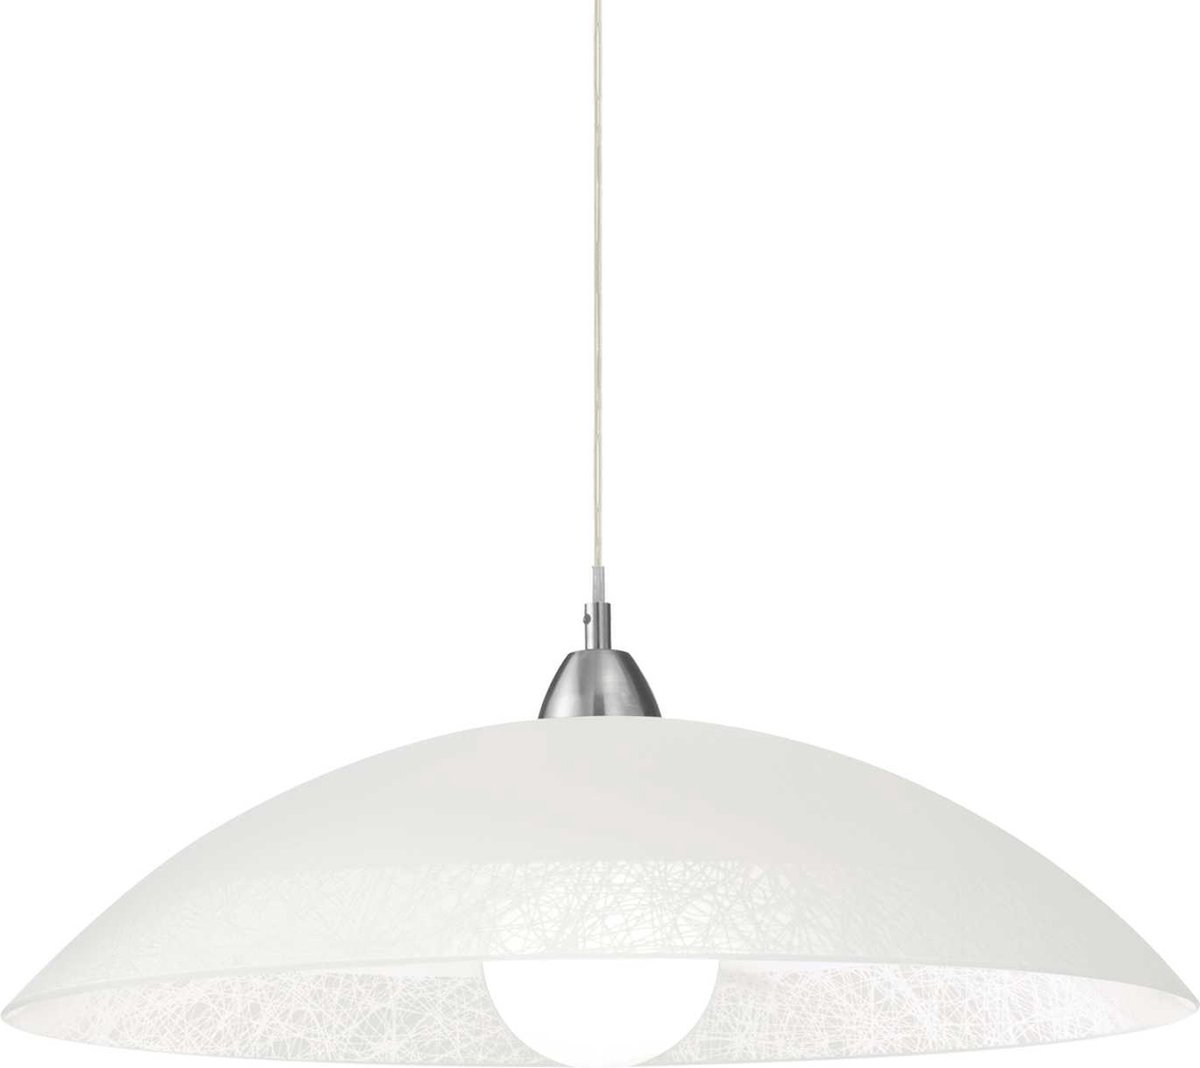 Ideal Your Lux - Hanglamp Modern - Glas - E27 - Voor Binnen - Lamp - Lampen - Woonkamer - Eetkamer - Slaapkamer - Grijs